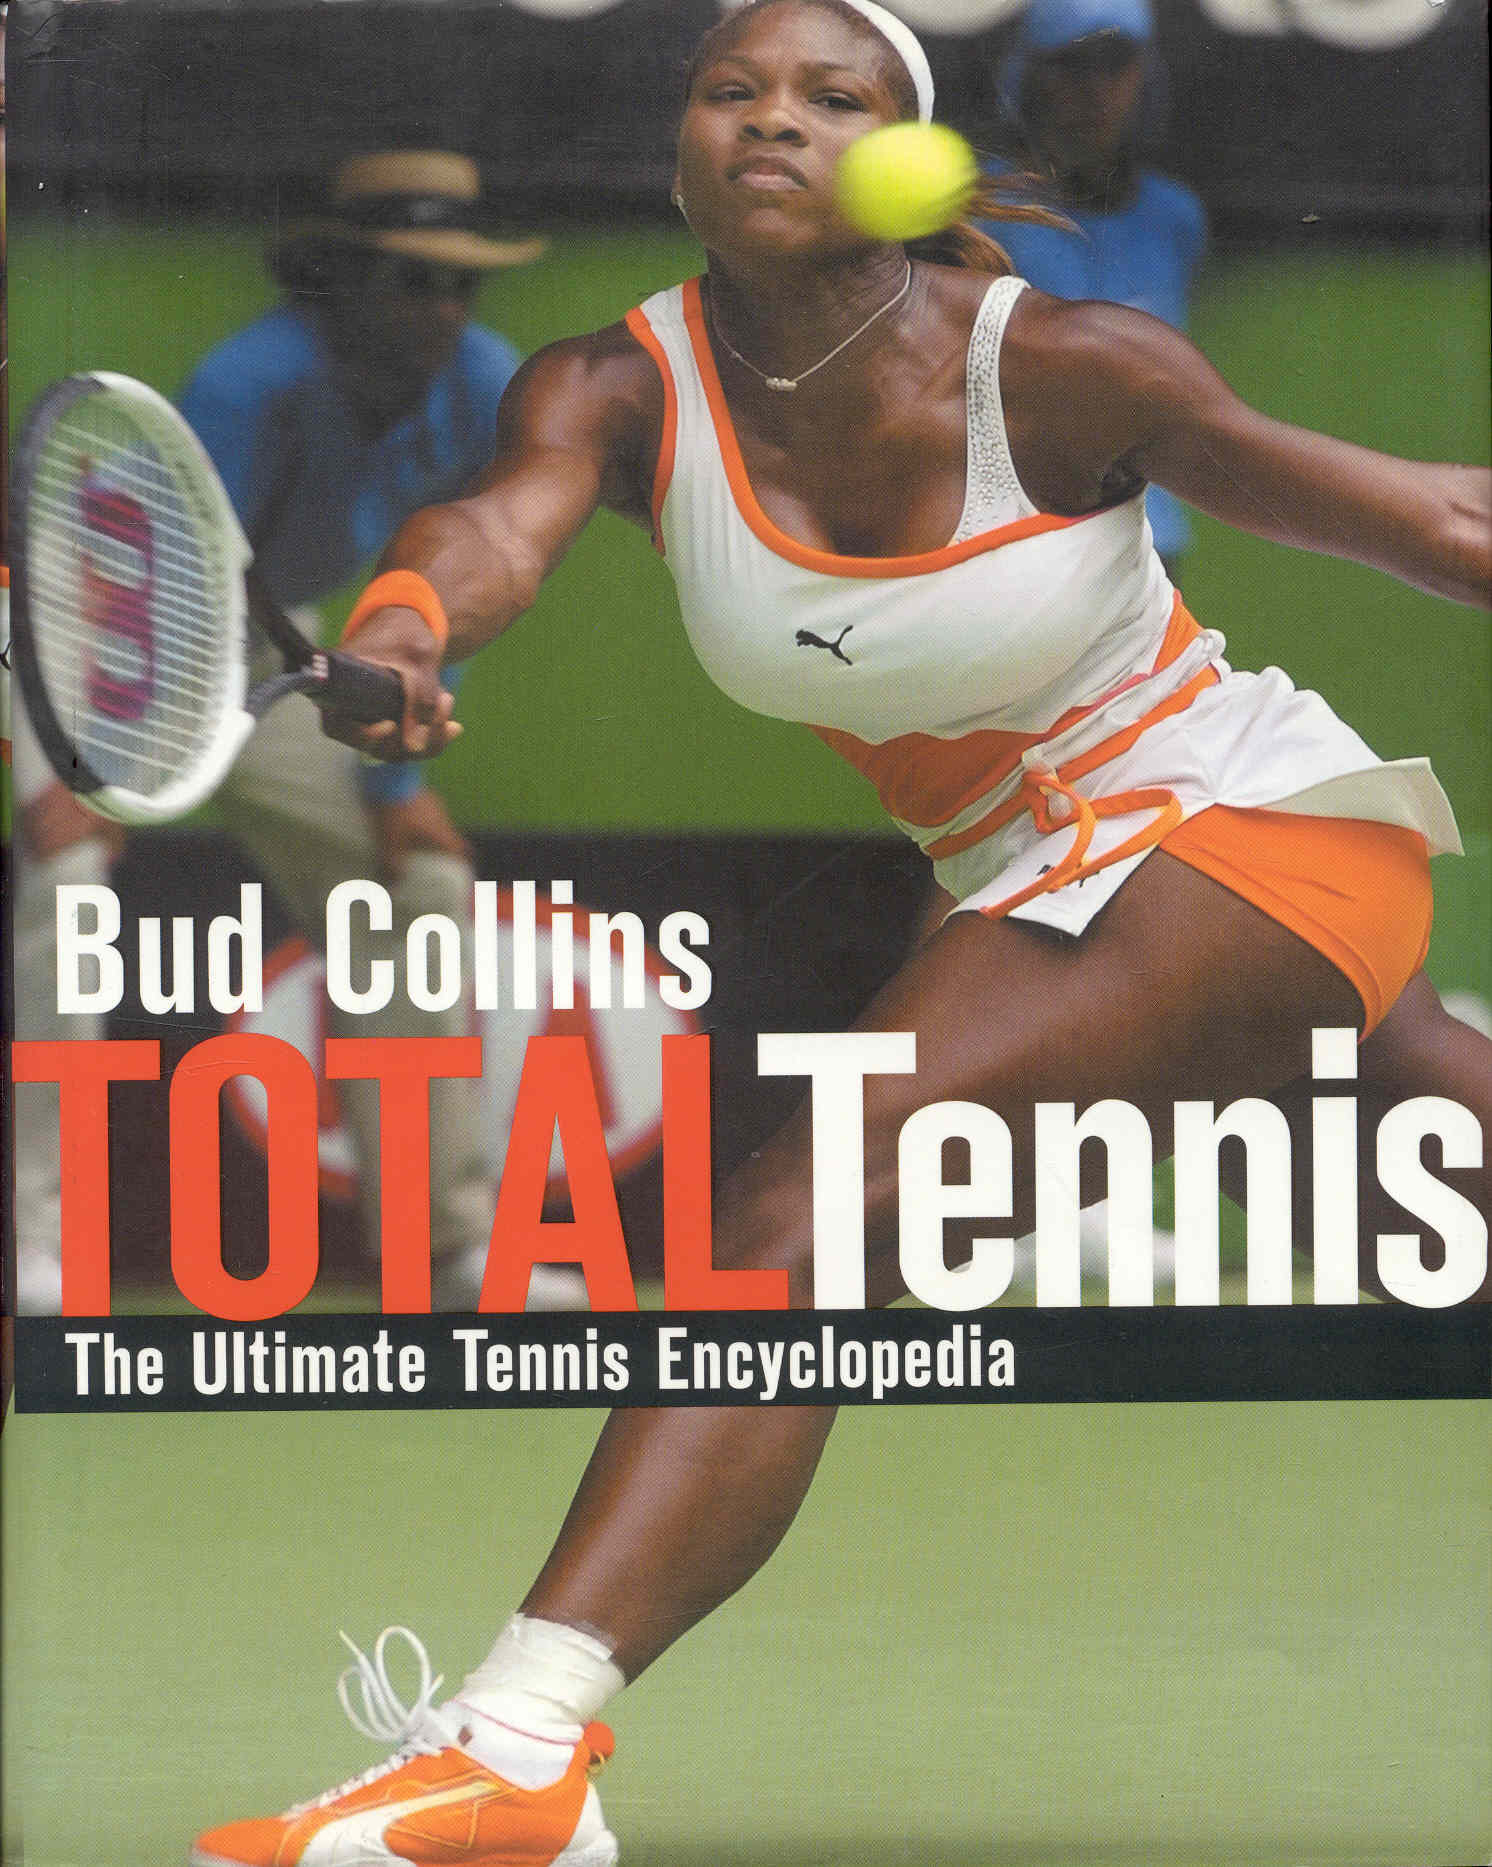 TOTAL Tennis: The Ultimate Tennis Encyclopedia - Bud Collins